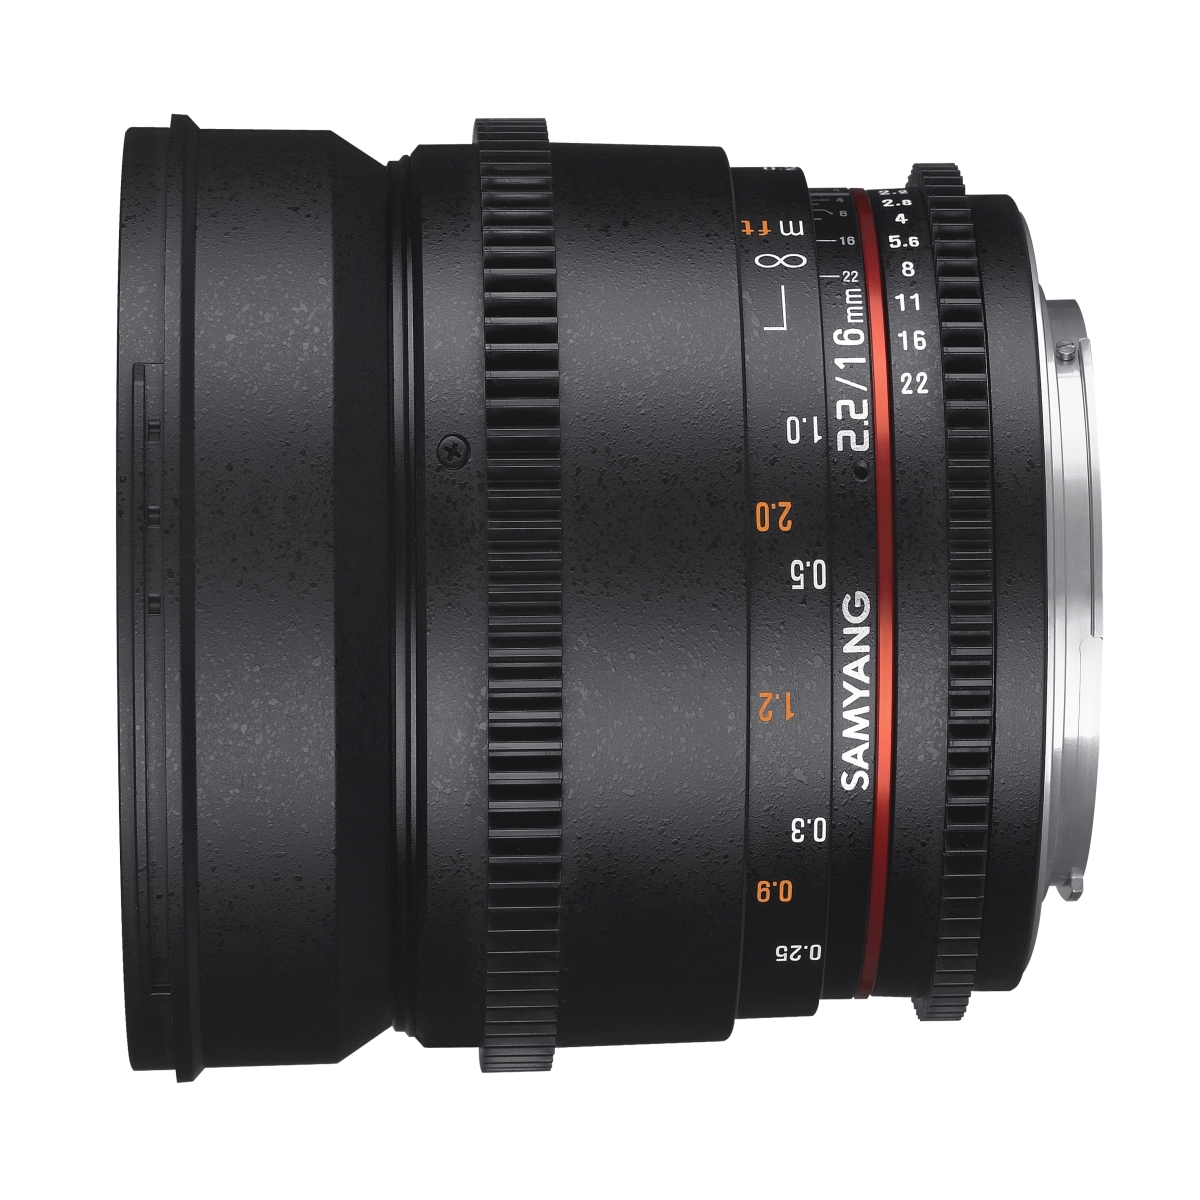 Samyang MF 16 mm 1:2,2 Video II für Canon EF-M